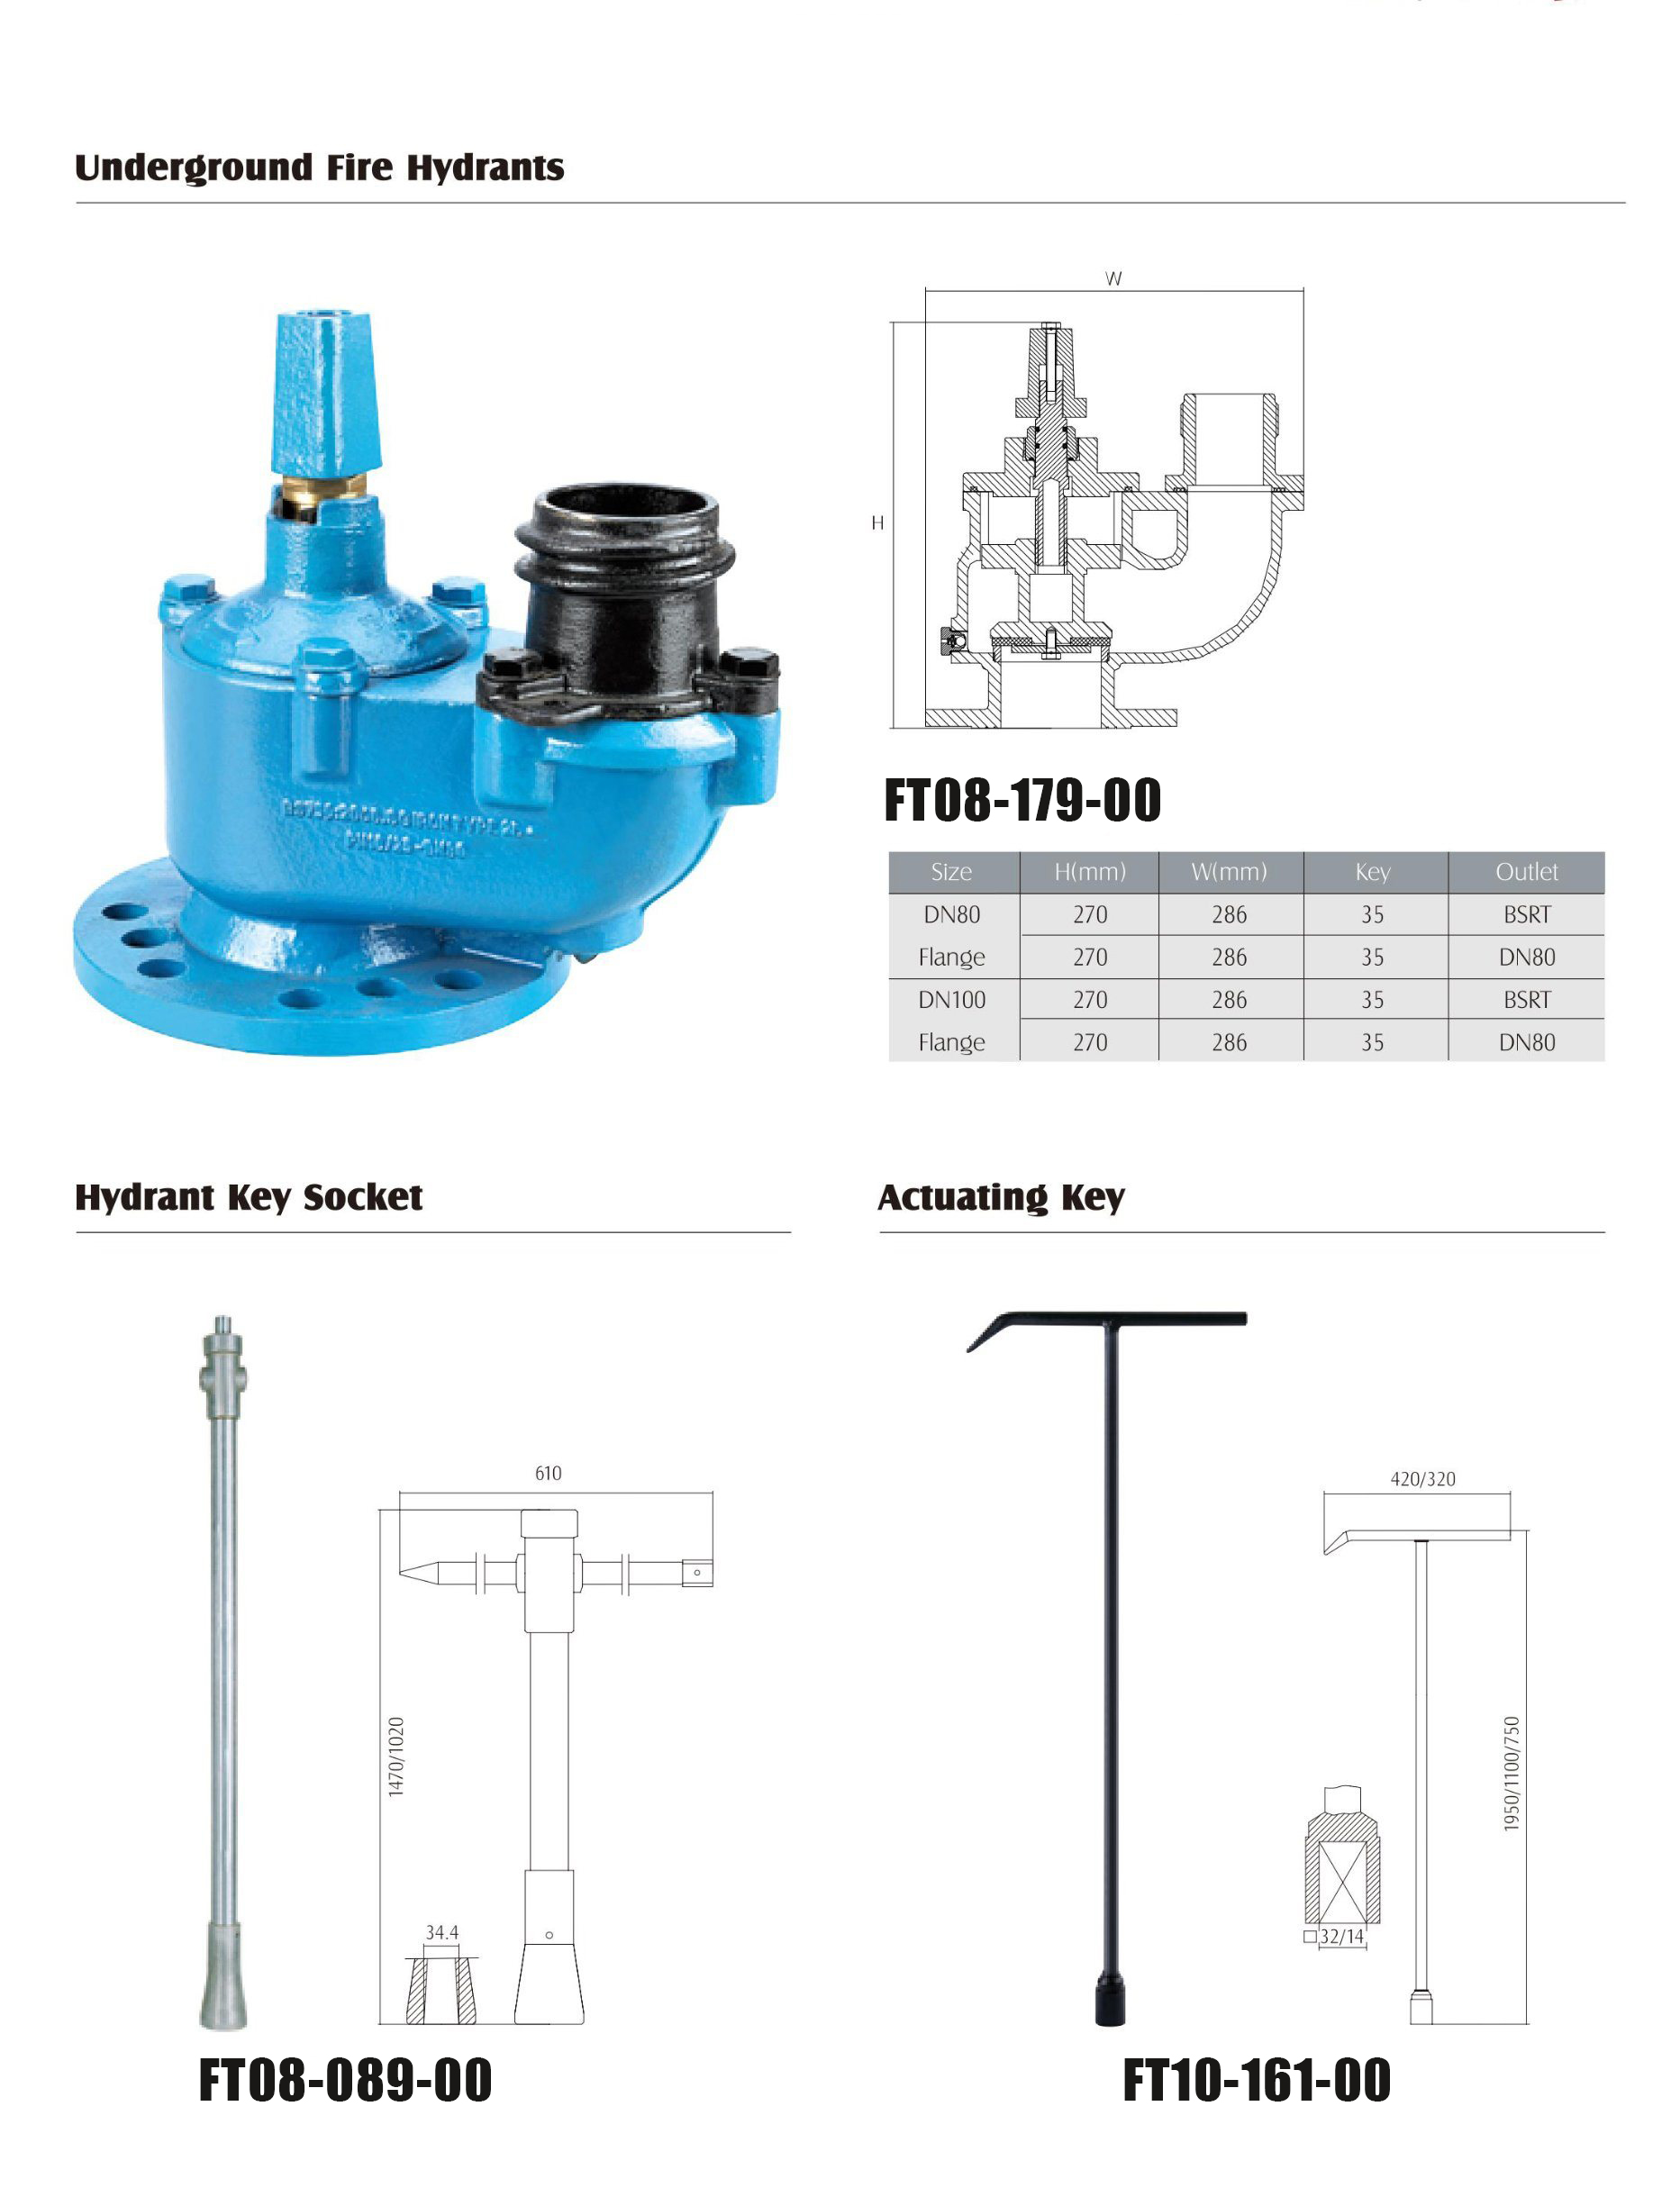 BS standard EN 1561 Underground Fire Hydrant with Key